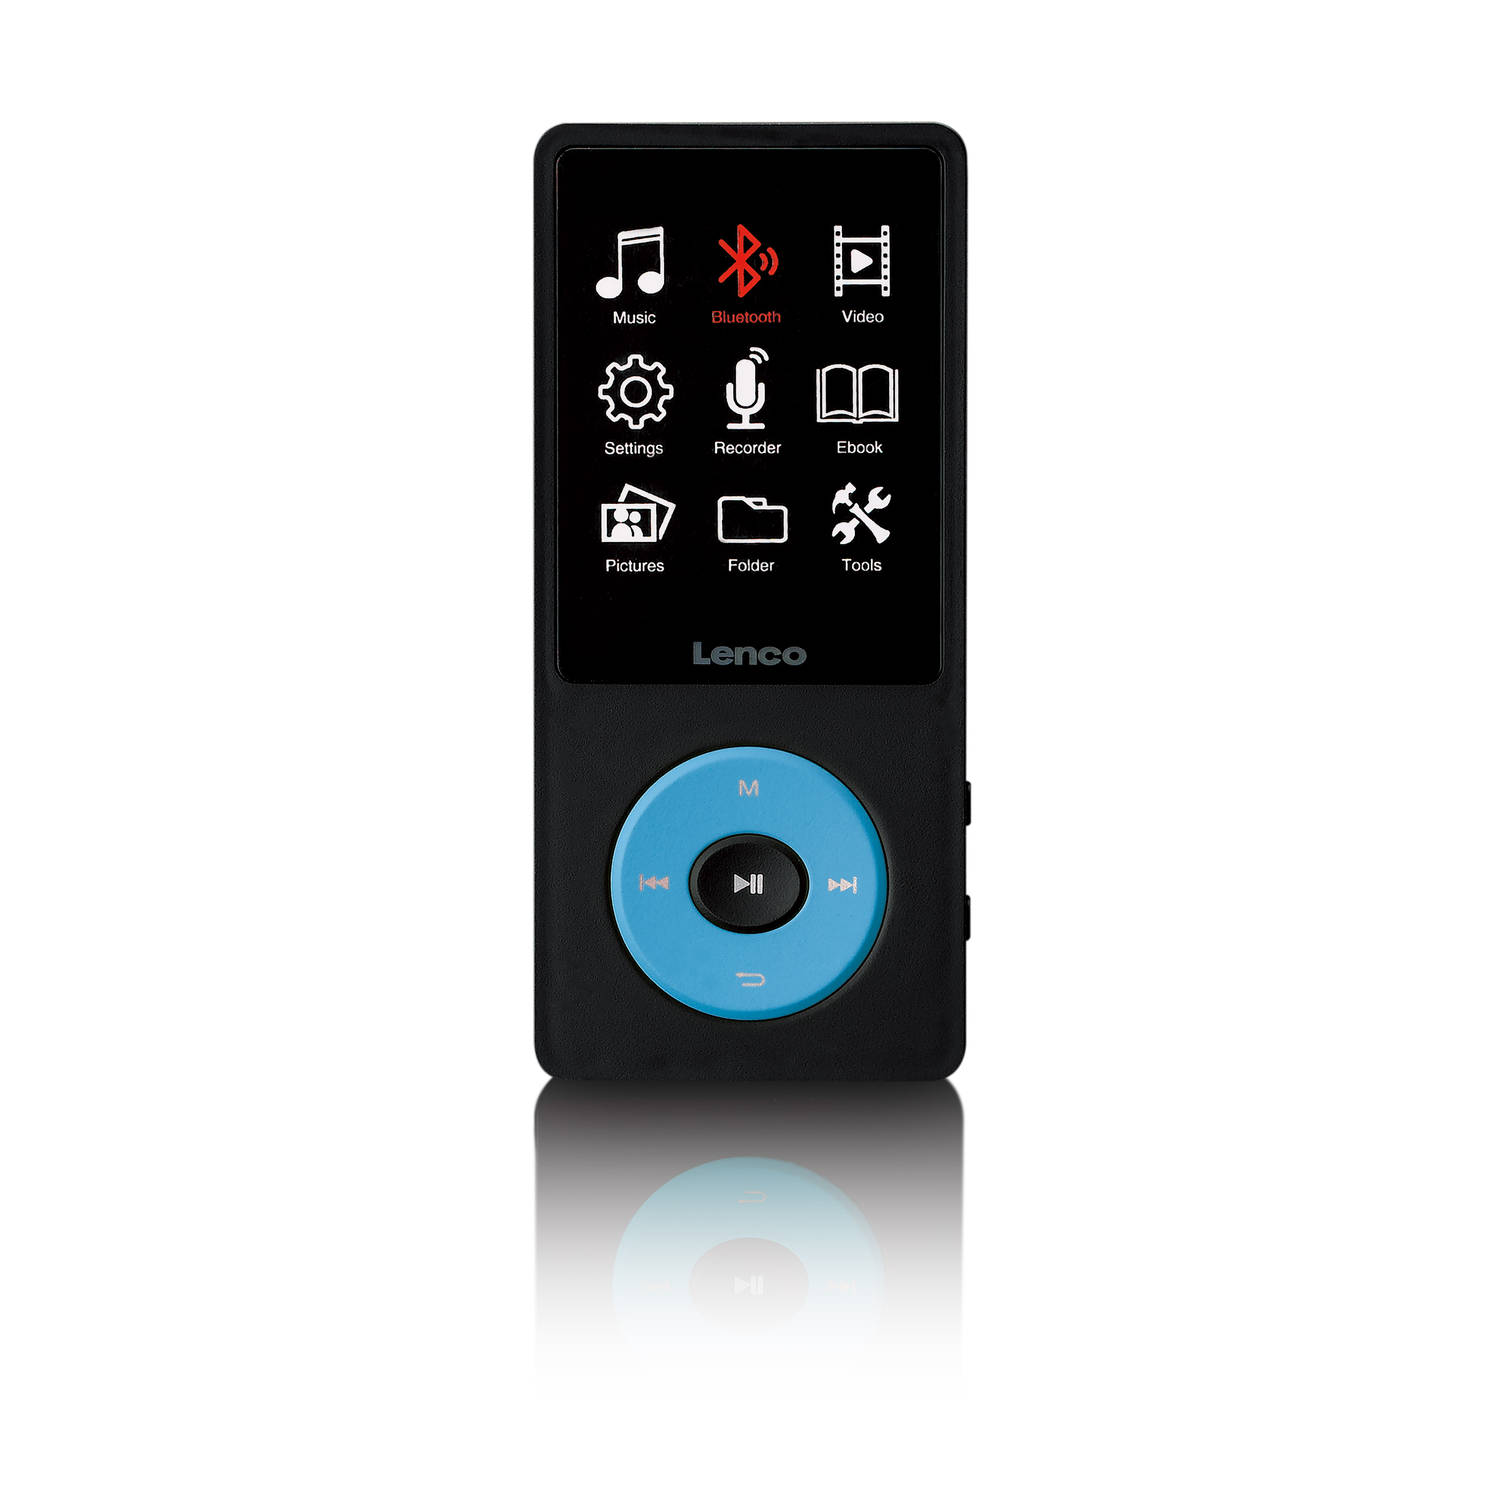 Lenco Xemio-860BU - MP3/MP4 speler met Bluetooth en 8GB intern geheugen - Blauw